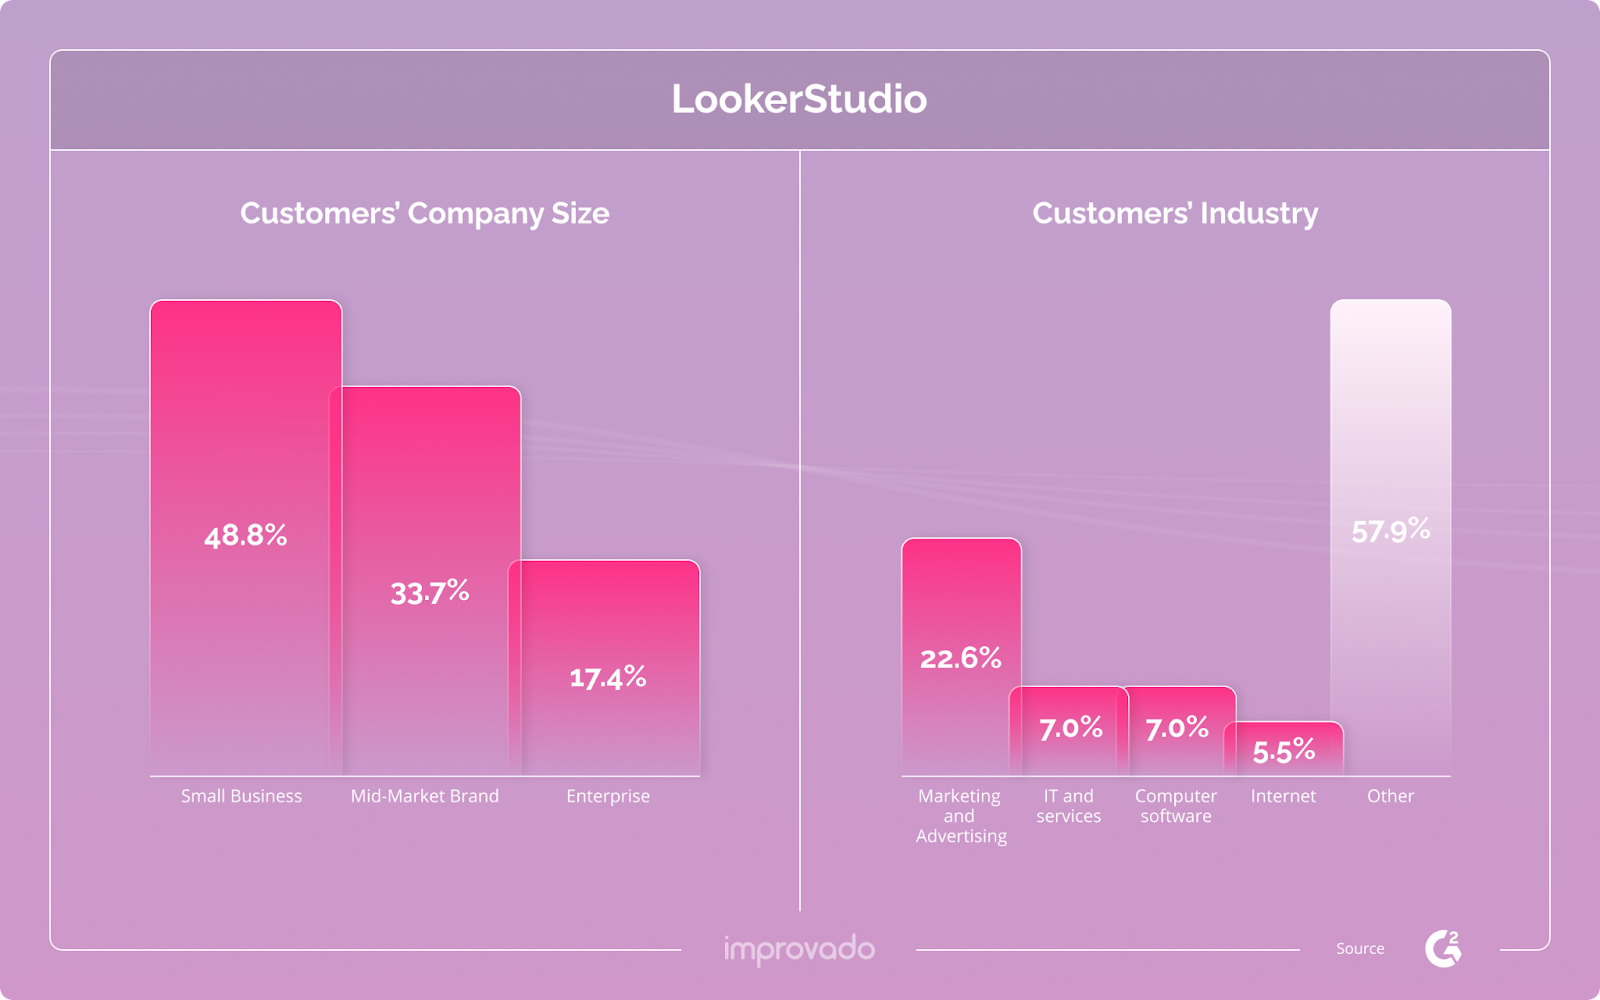 Looker Studio has a quite diverse user base.